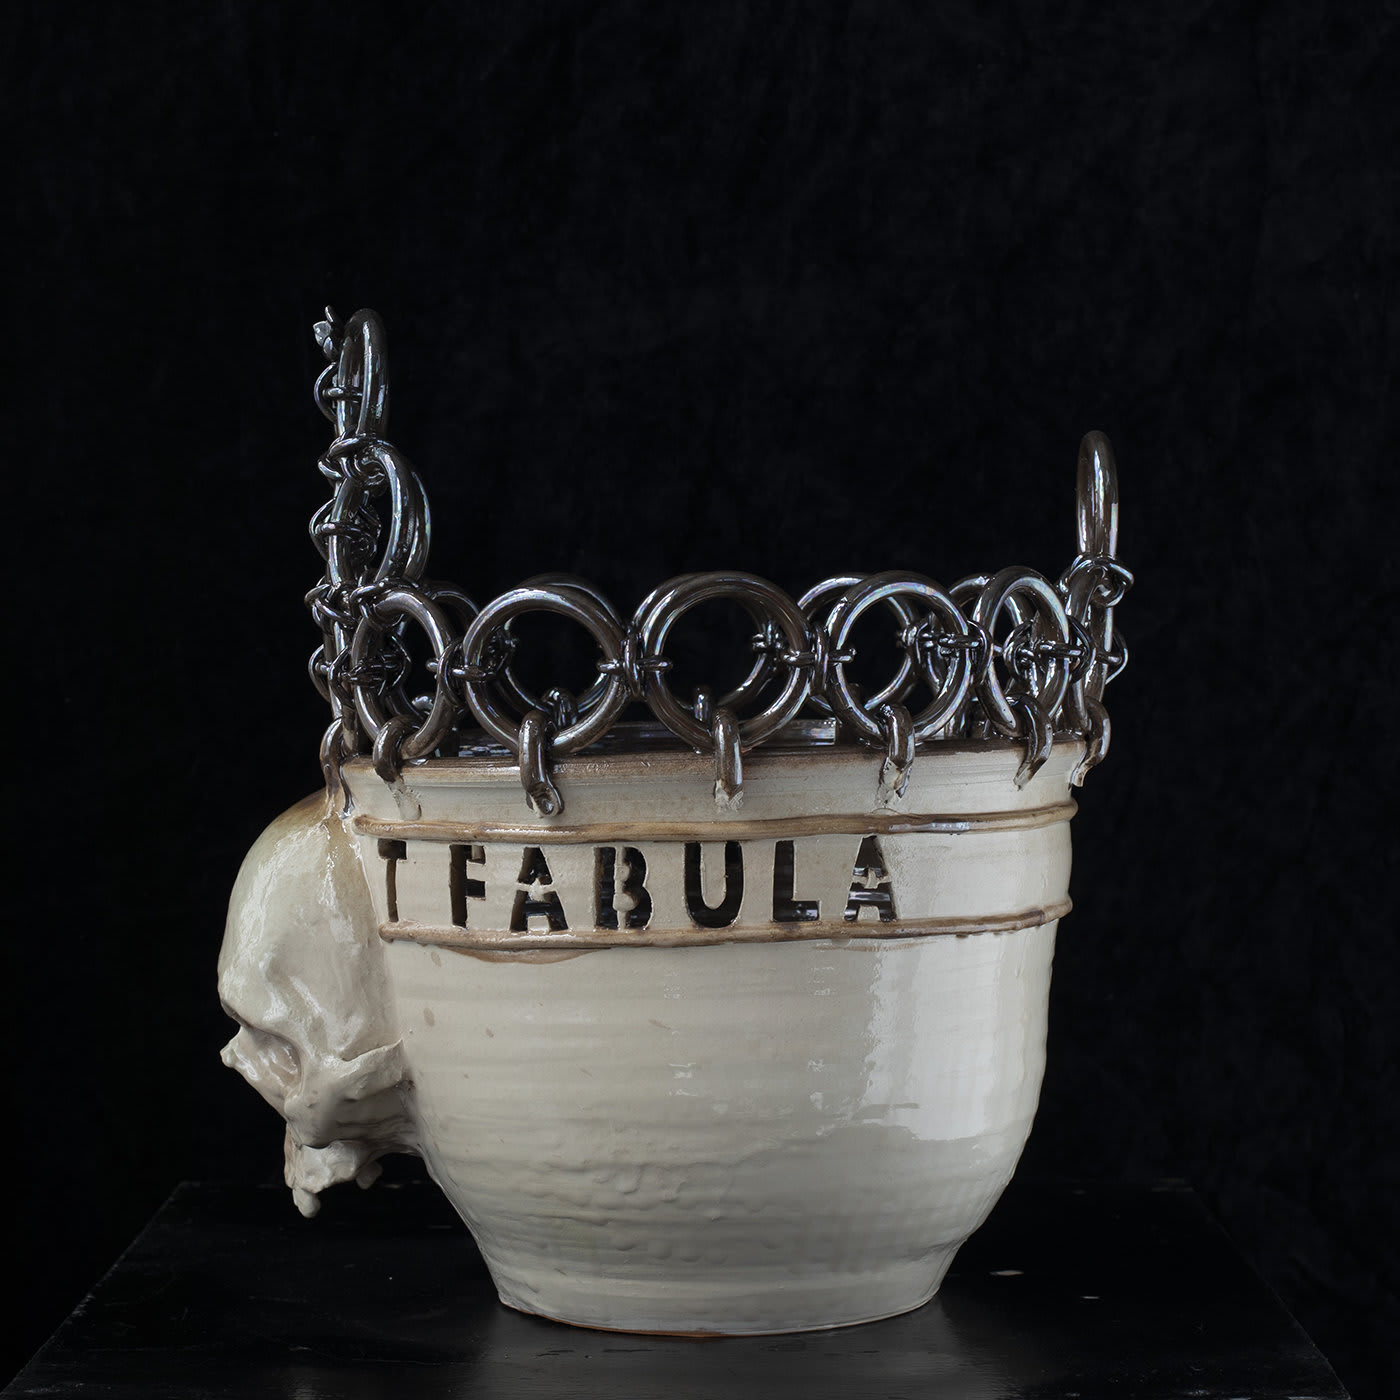 Acta Est Fabula Skull Vase - Sebastiano Leta